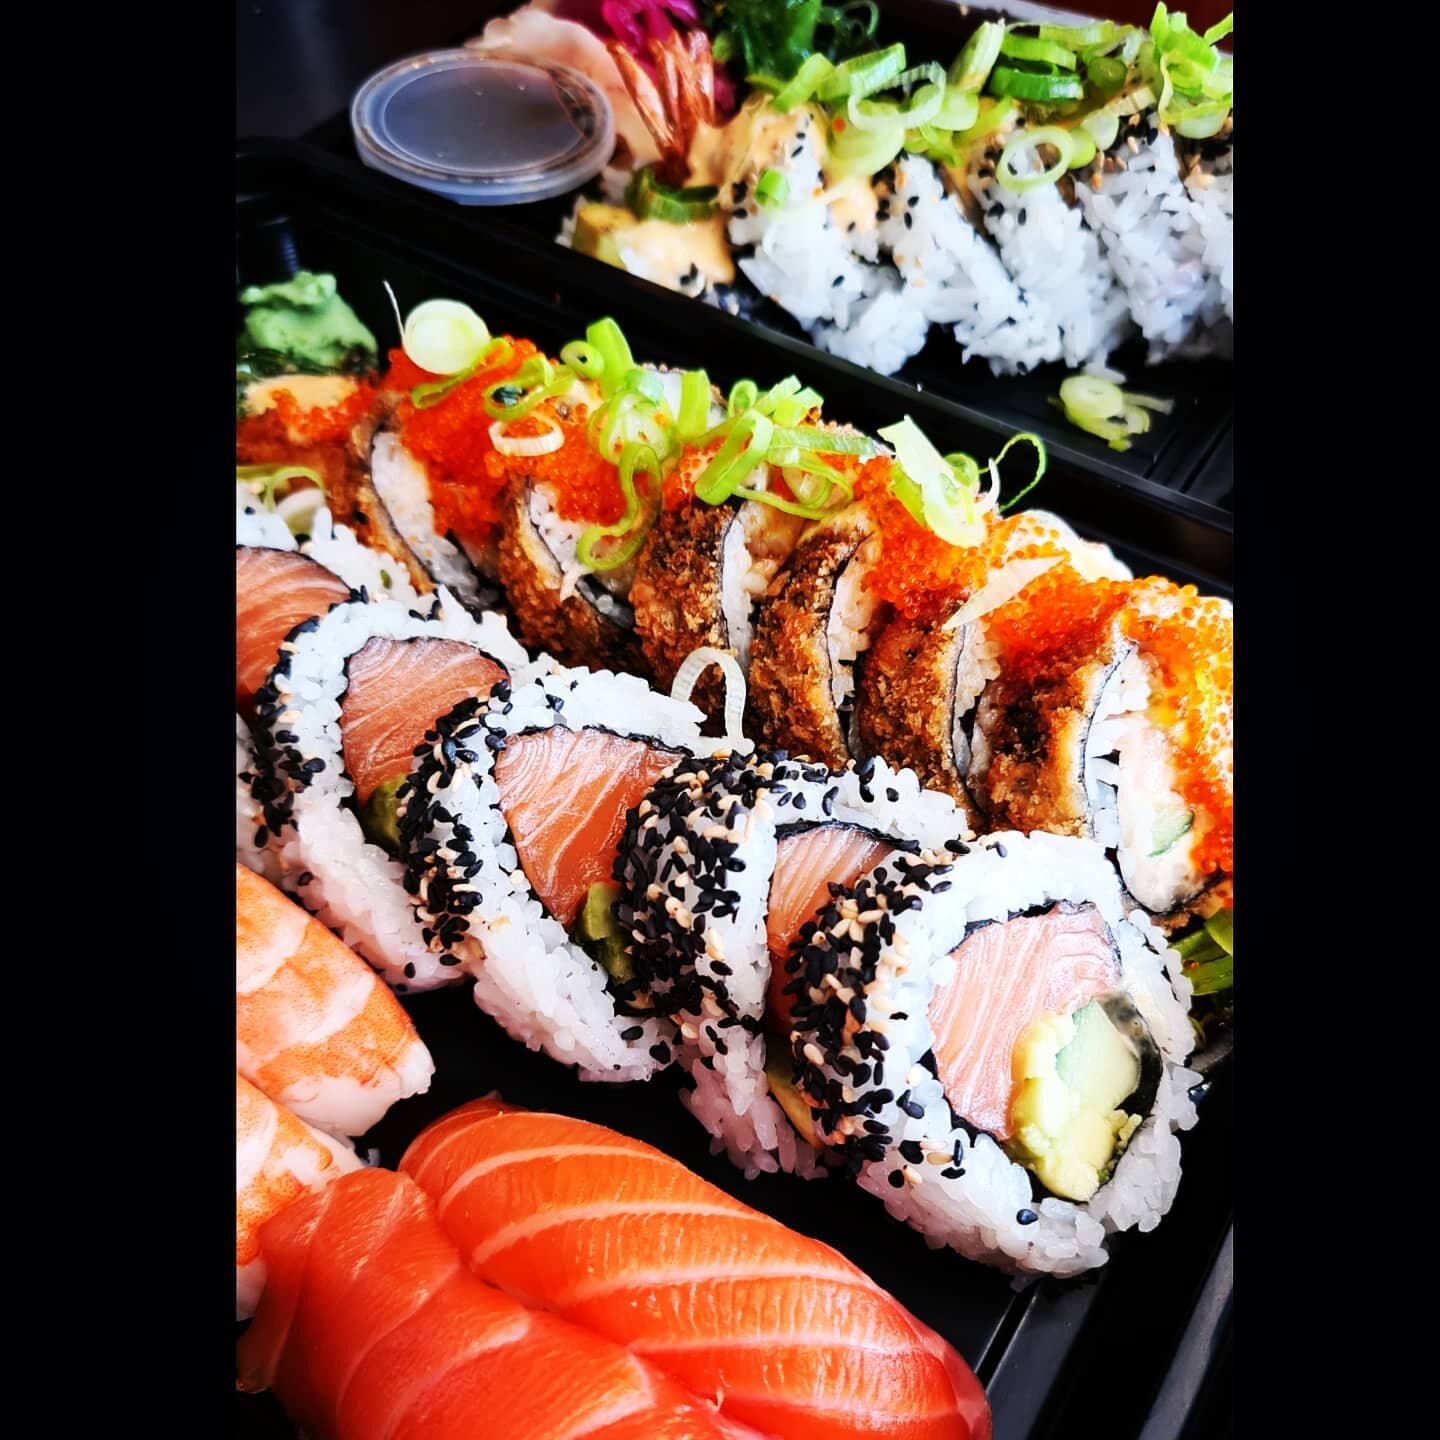 Foodtrucksushi!
#teamlovundkokken
#crispylovund
#foodtruck 
#sushi
#lovundkokken 
#ferskestelaksen 🐟🐟